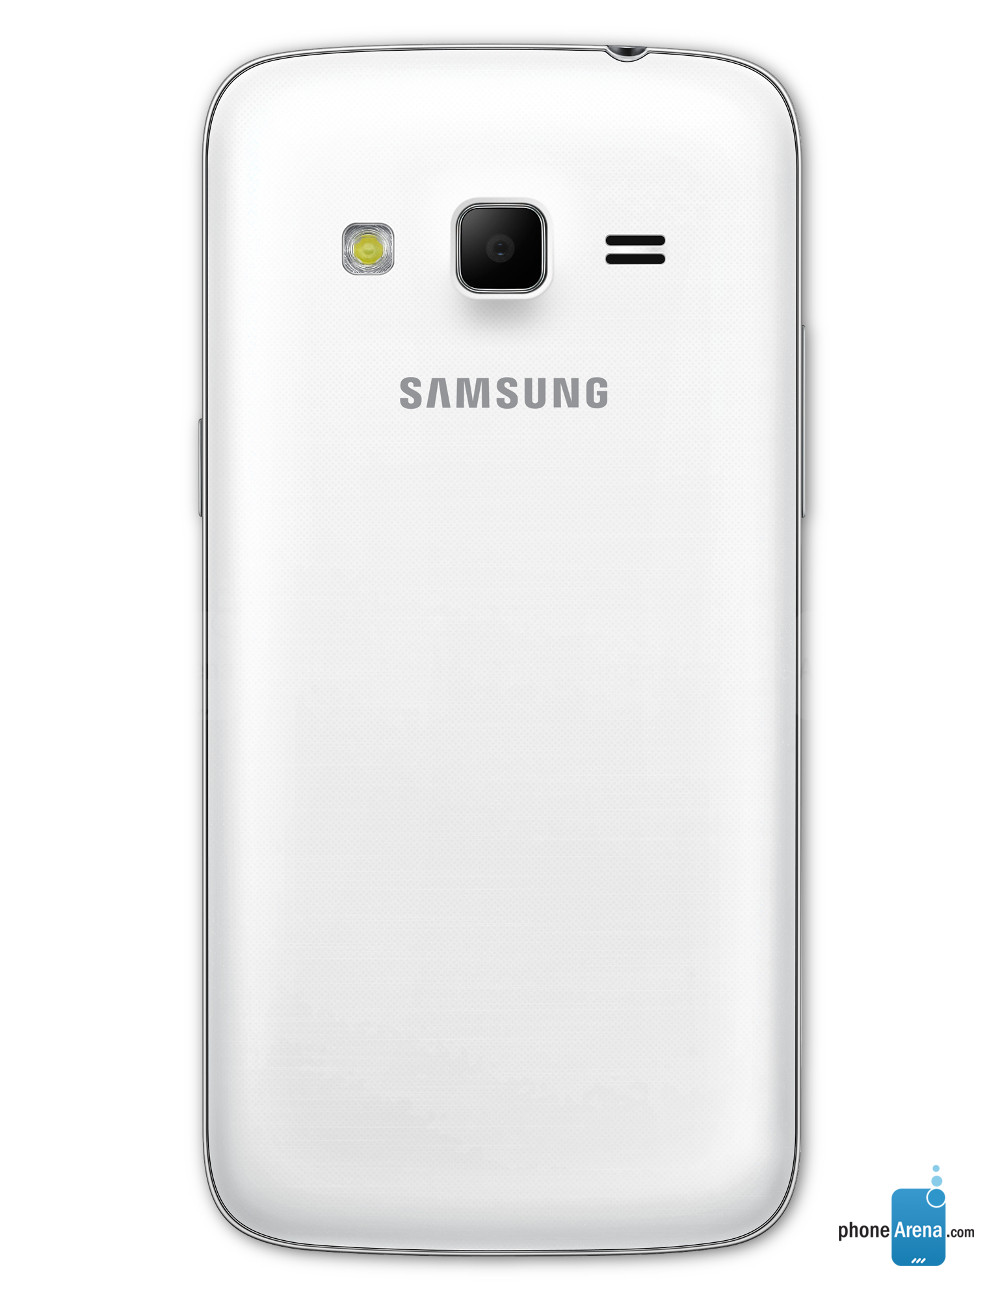 User Manual For Samsung Galaxy Express 3